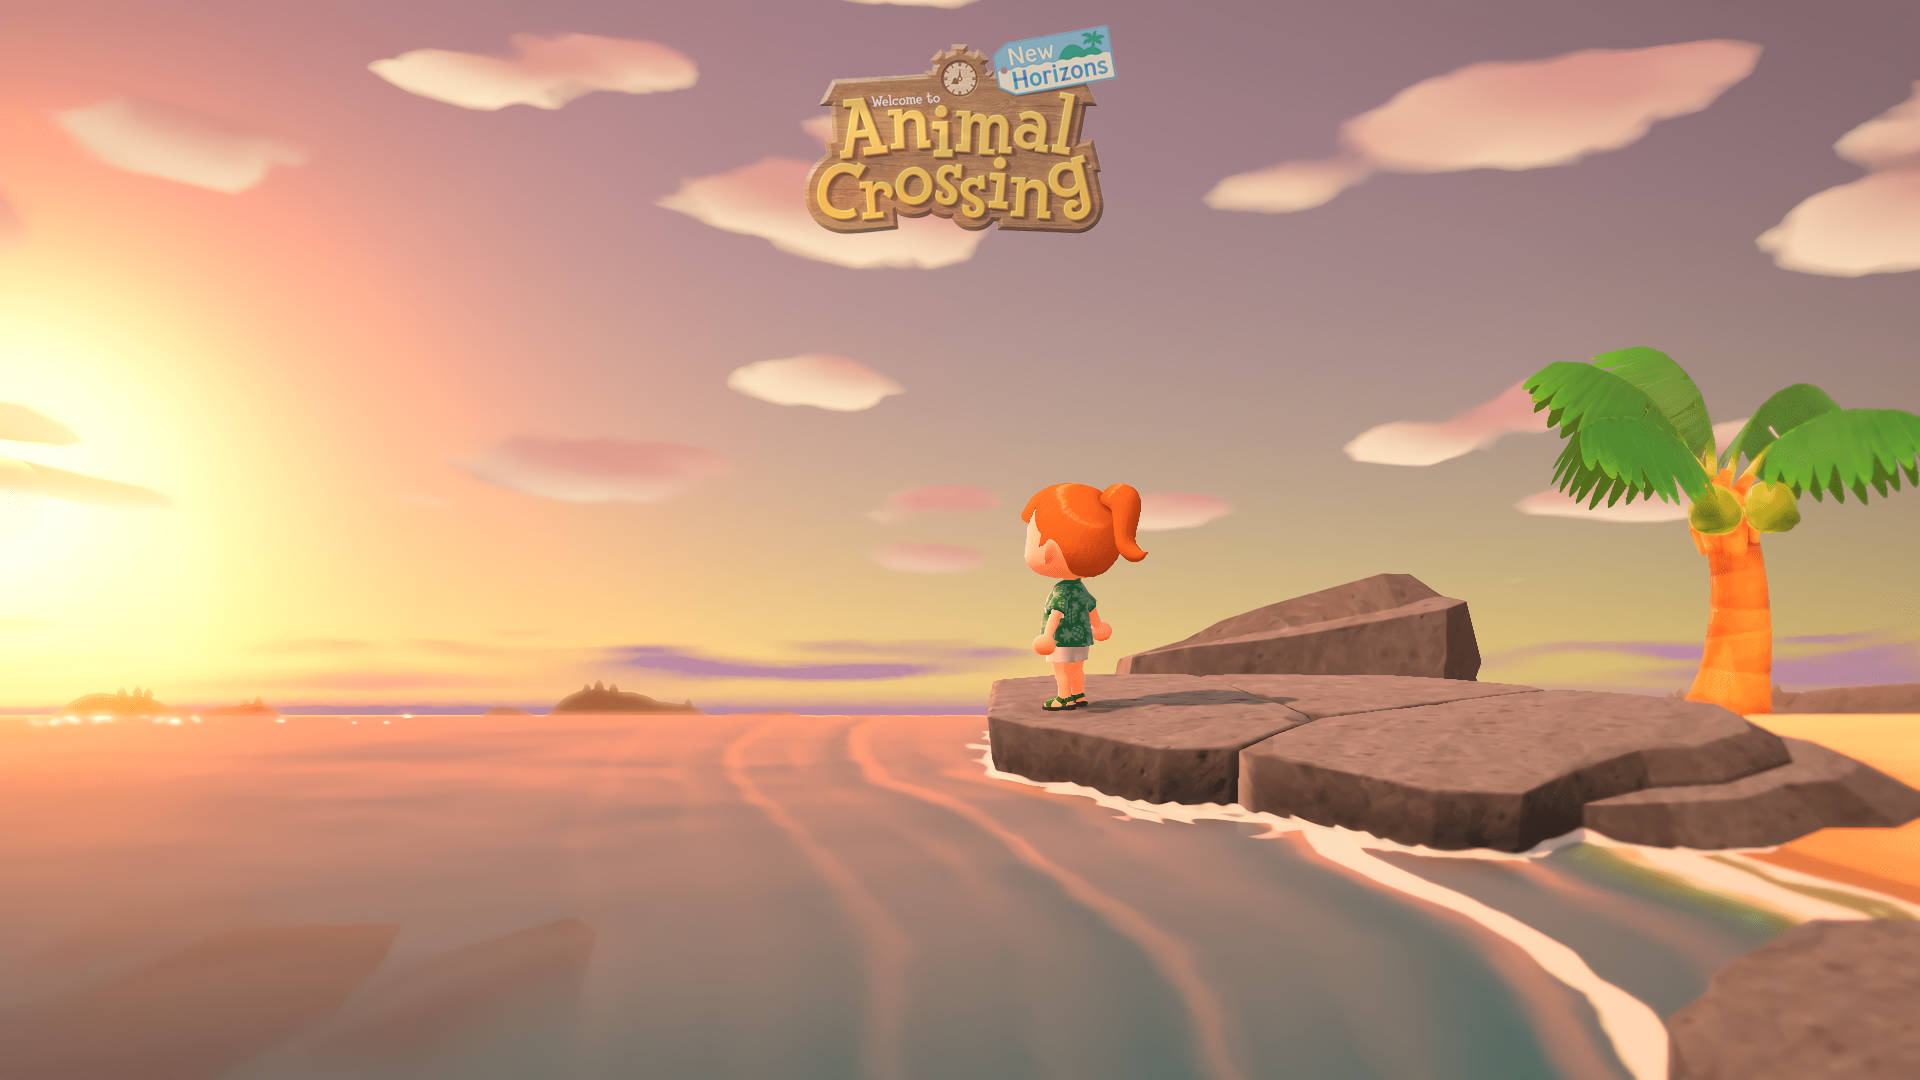 Hd Beautiful Sunset And Island Animal Crossing Background